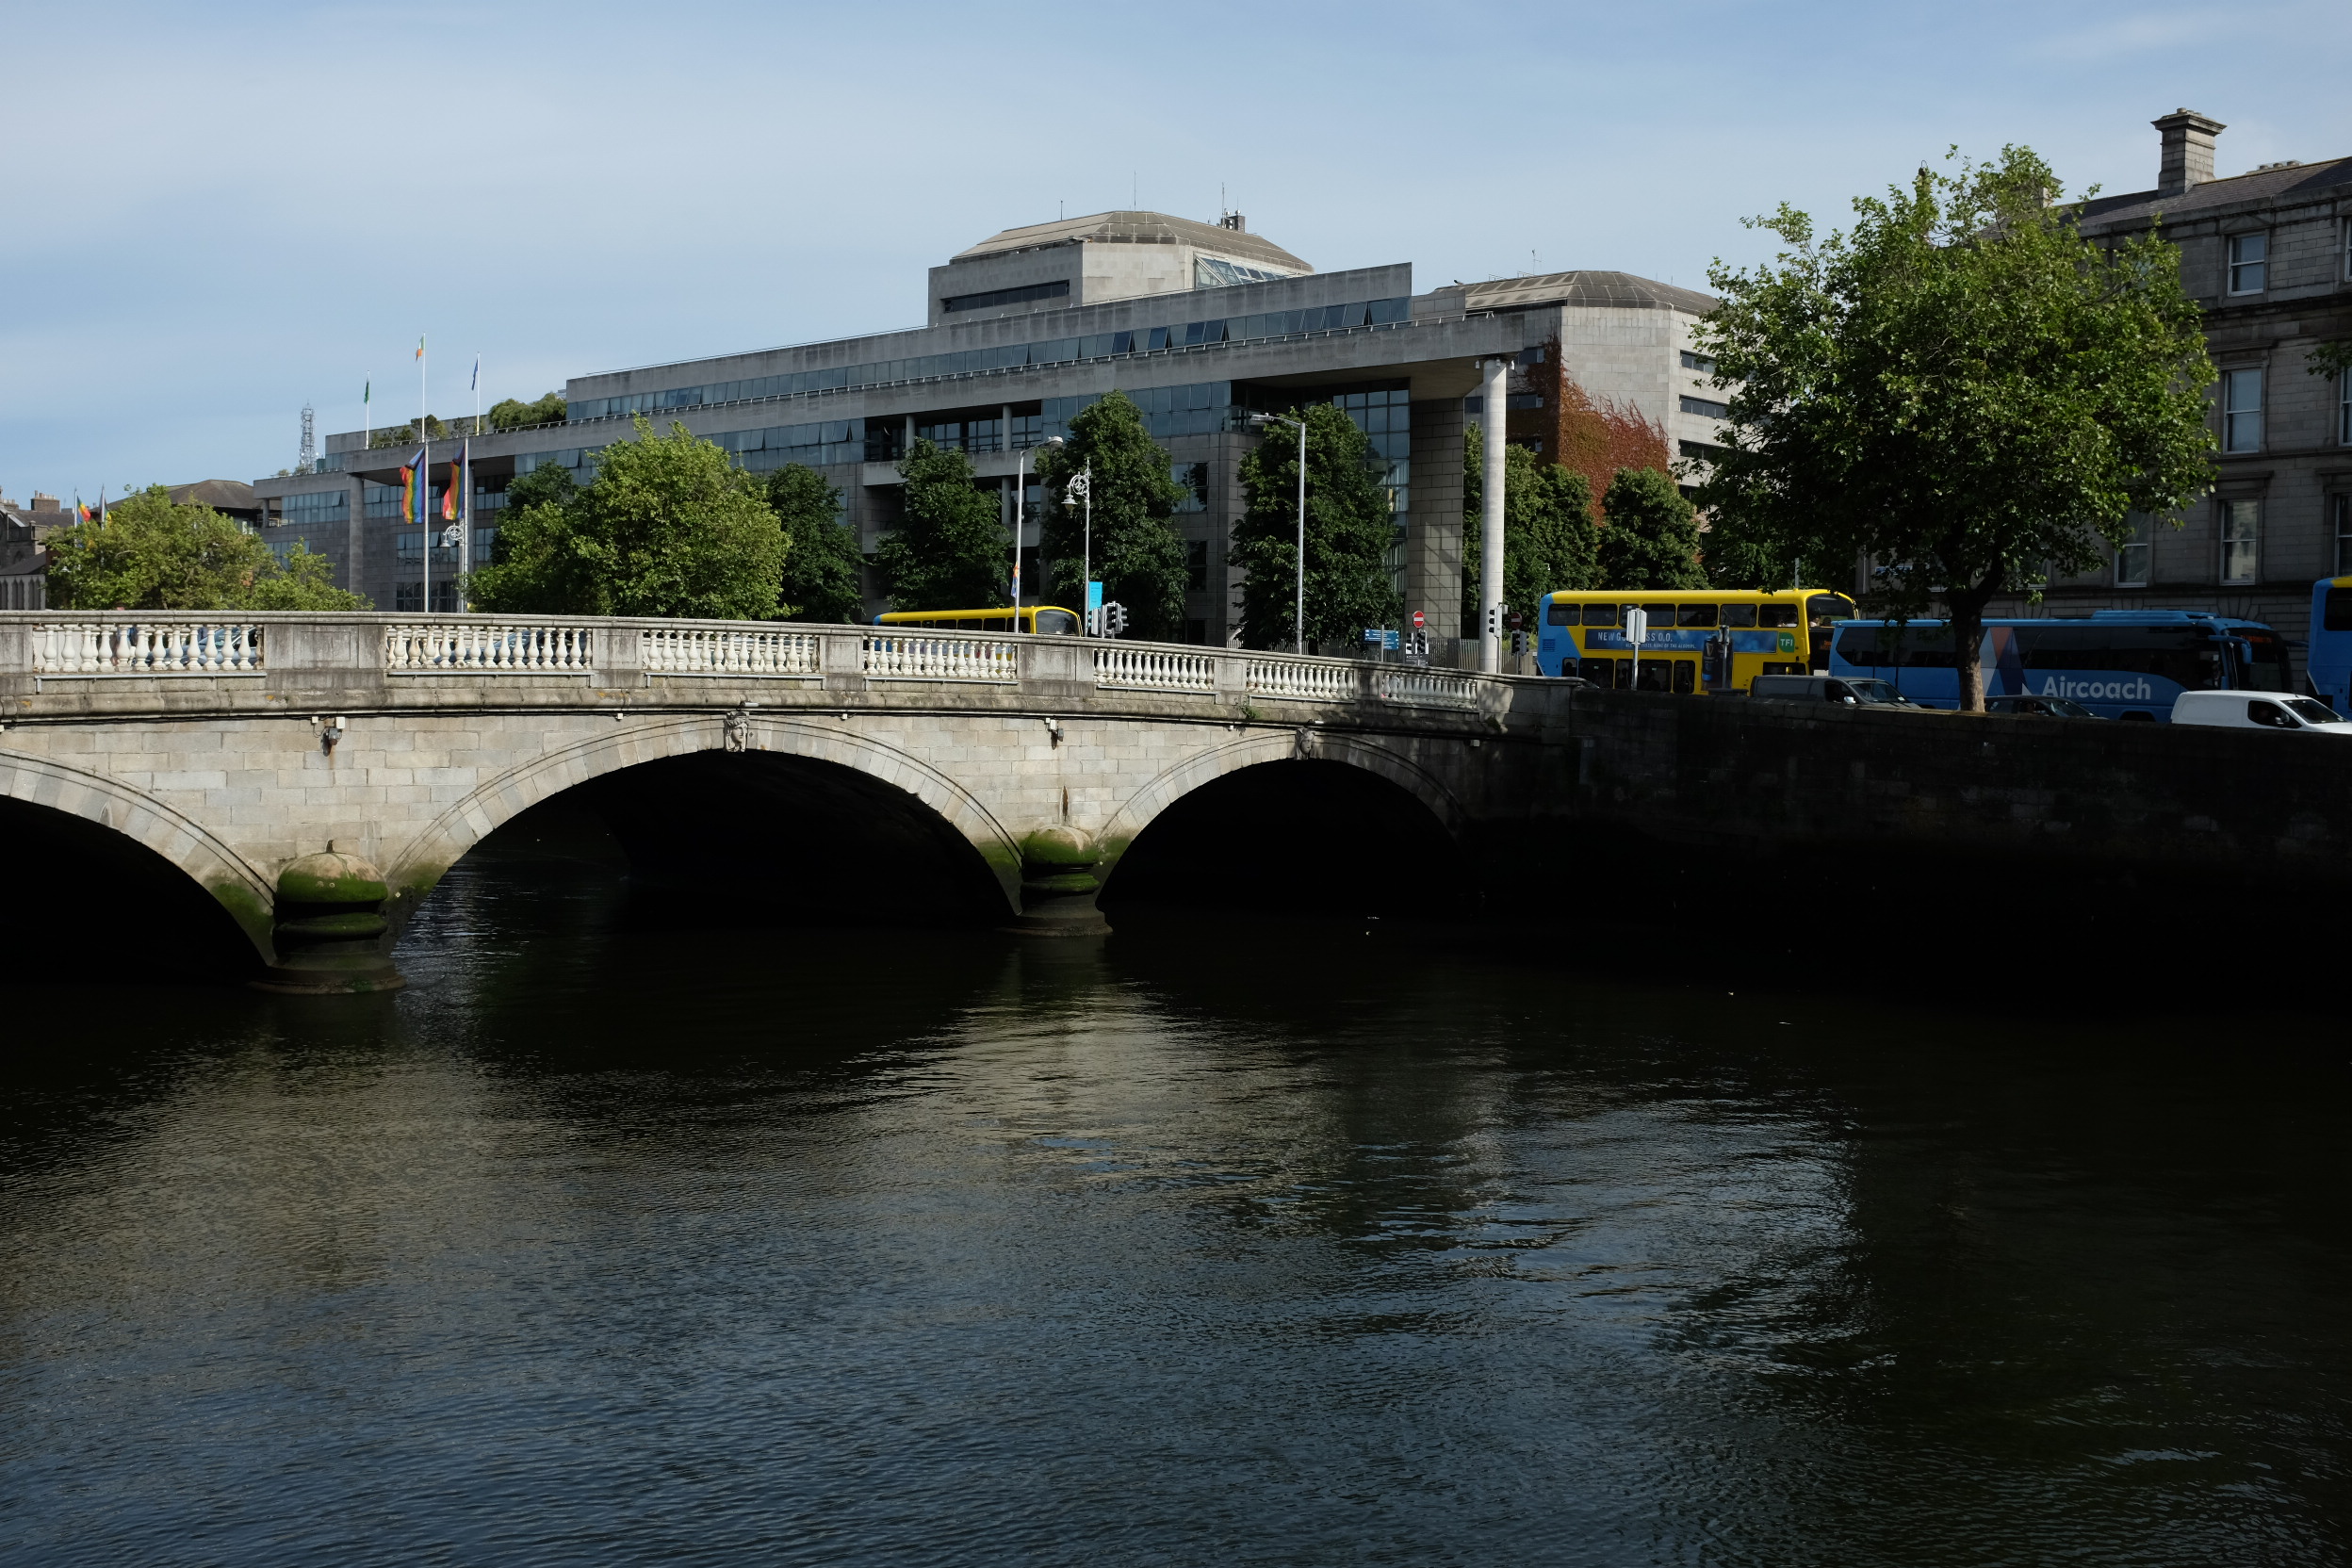 A photo of an arch bridge across the river Liffey.